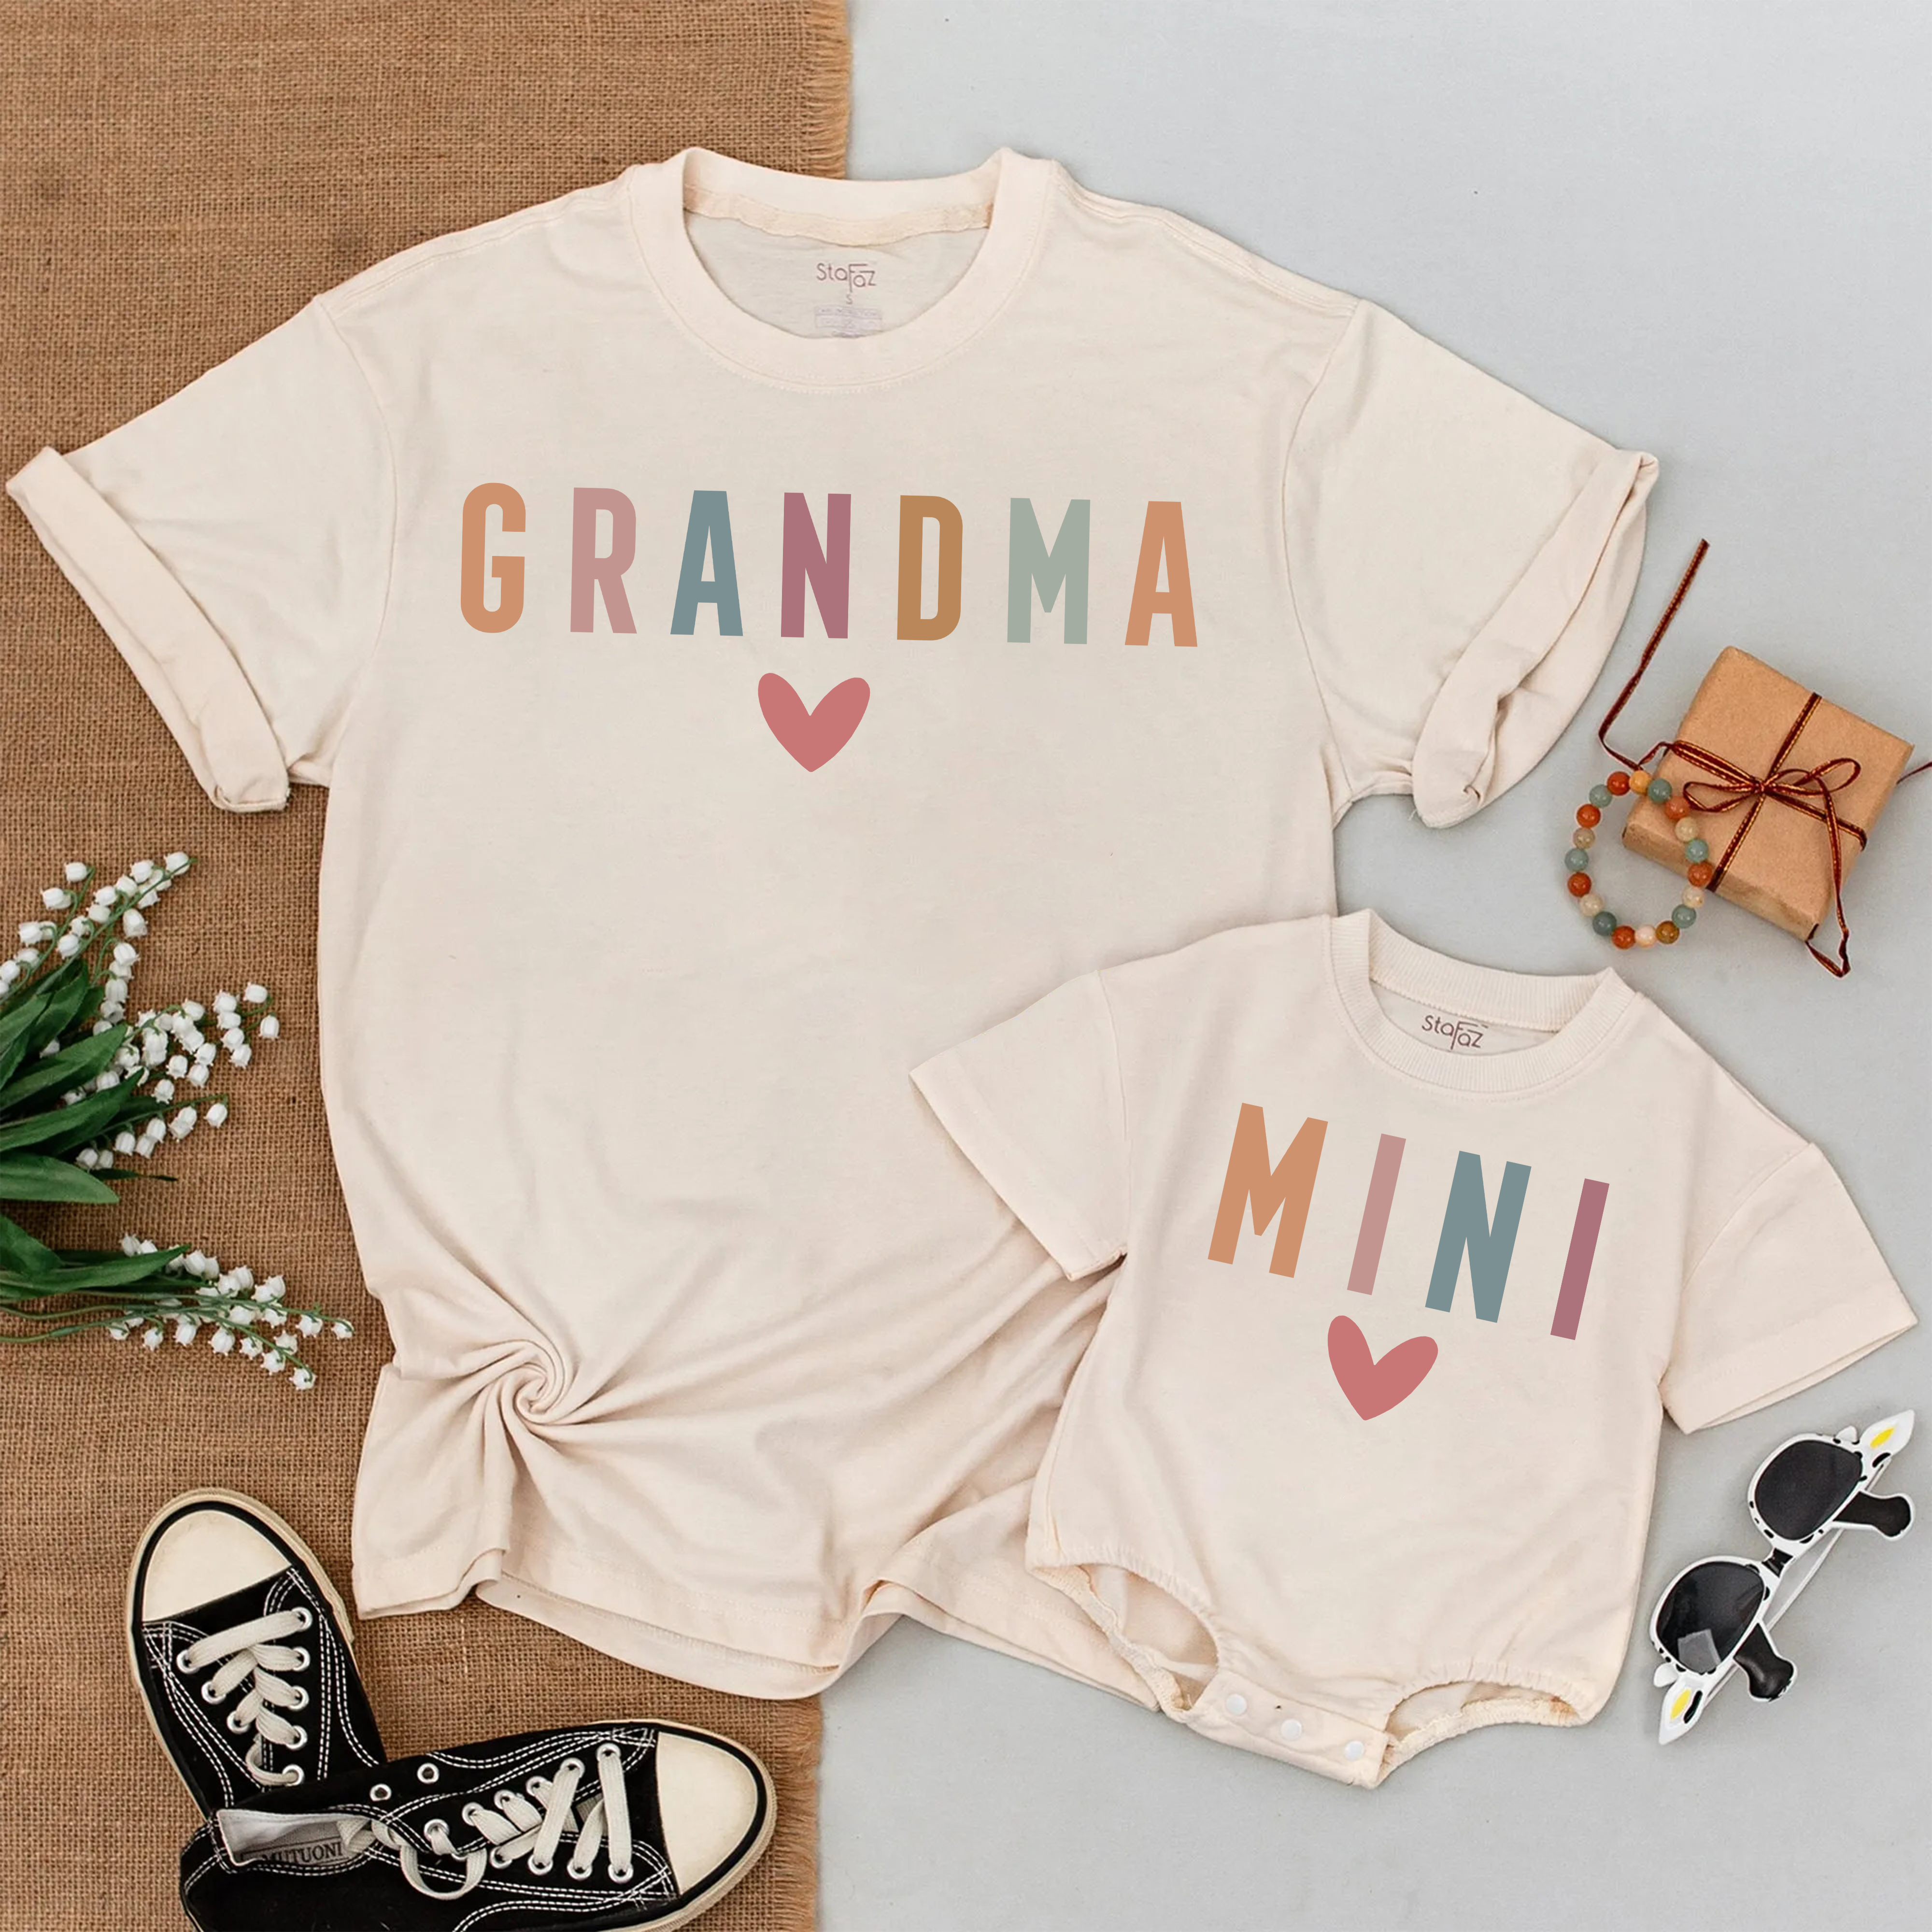 Grandma And Mini Romper Short Sleeve: Custom Matching Family T-Shirt!